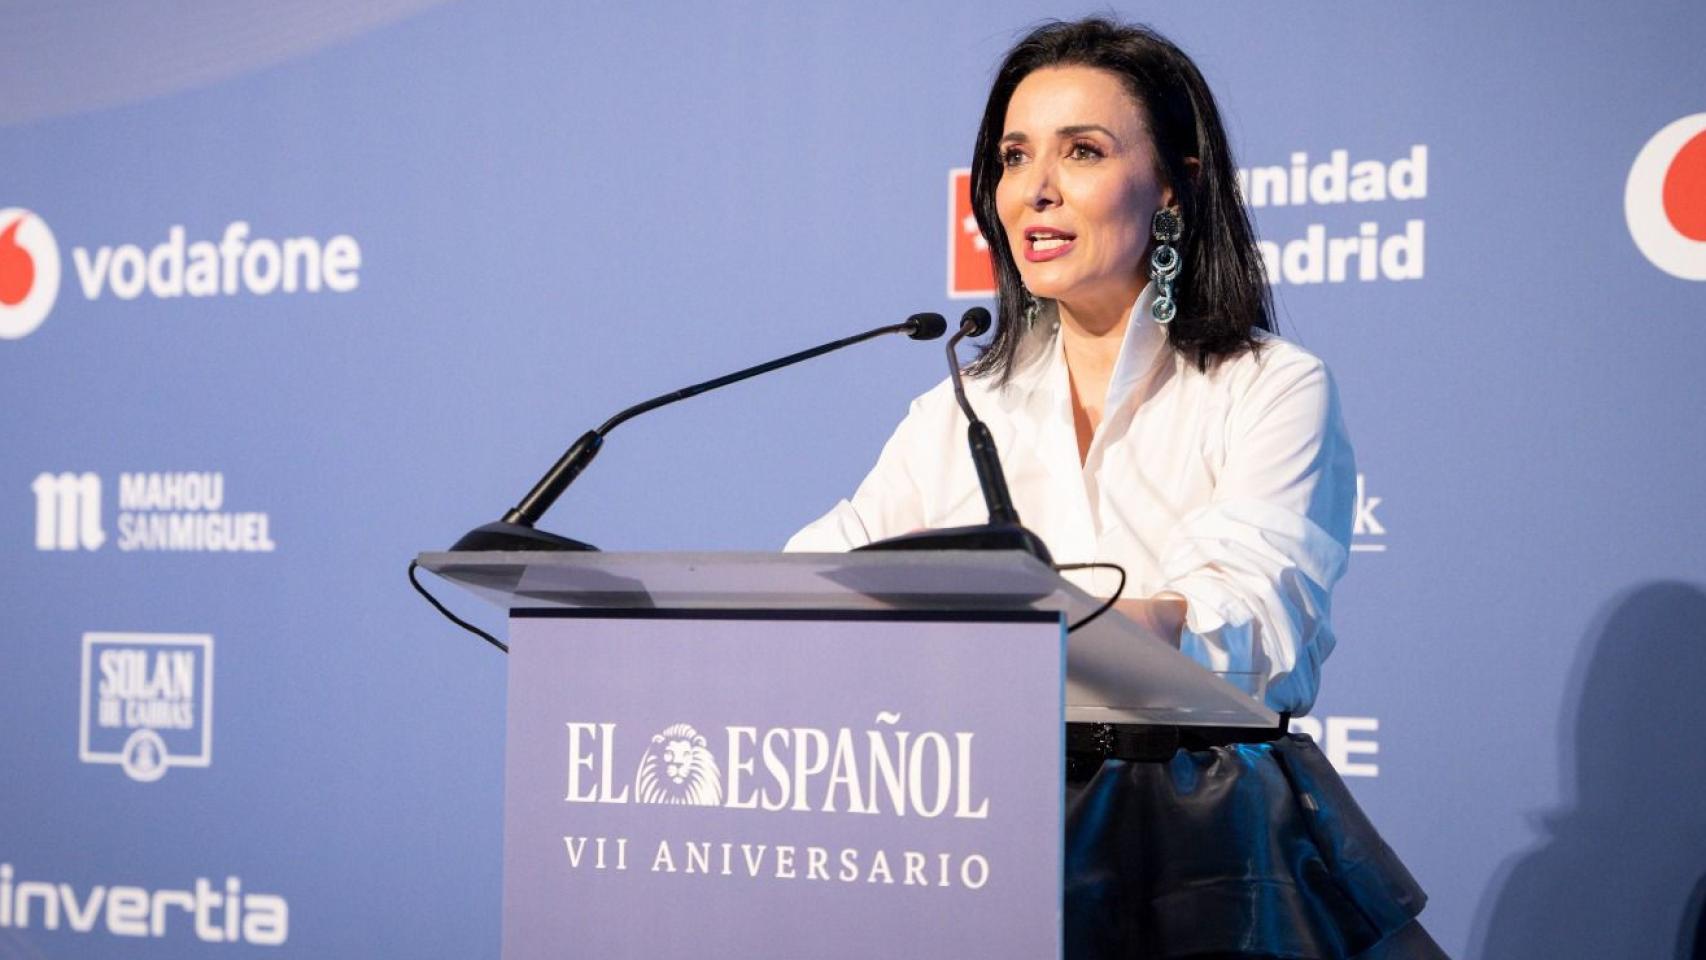 Cruz Sánchez de Lara highlighted among the 500 most influential women ...